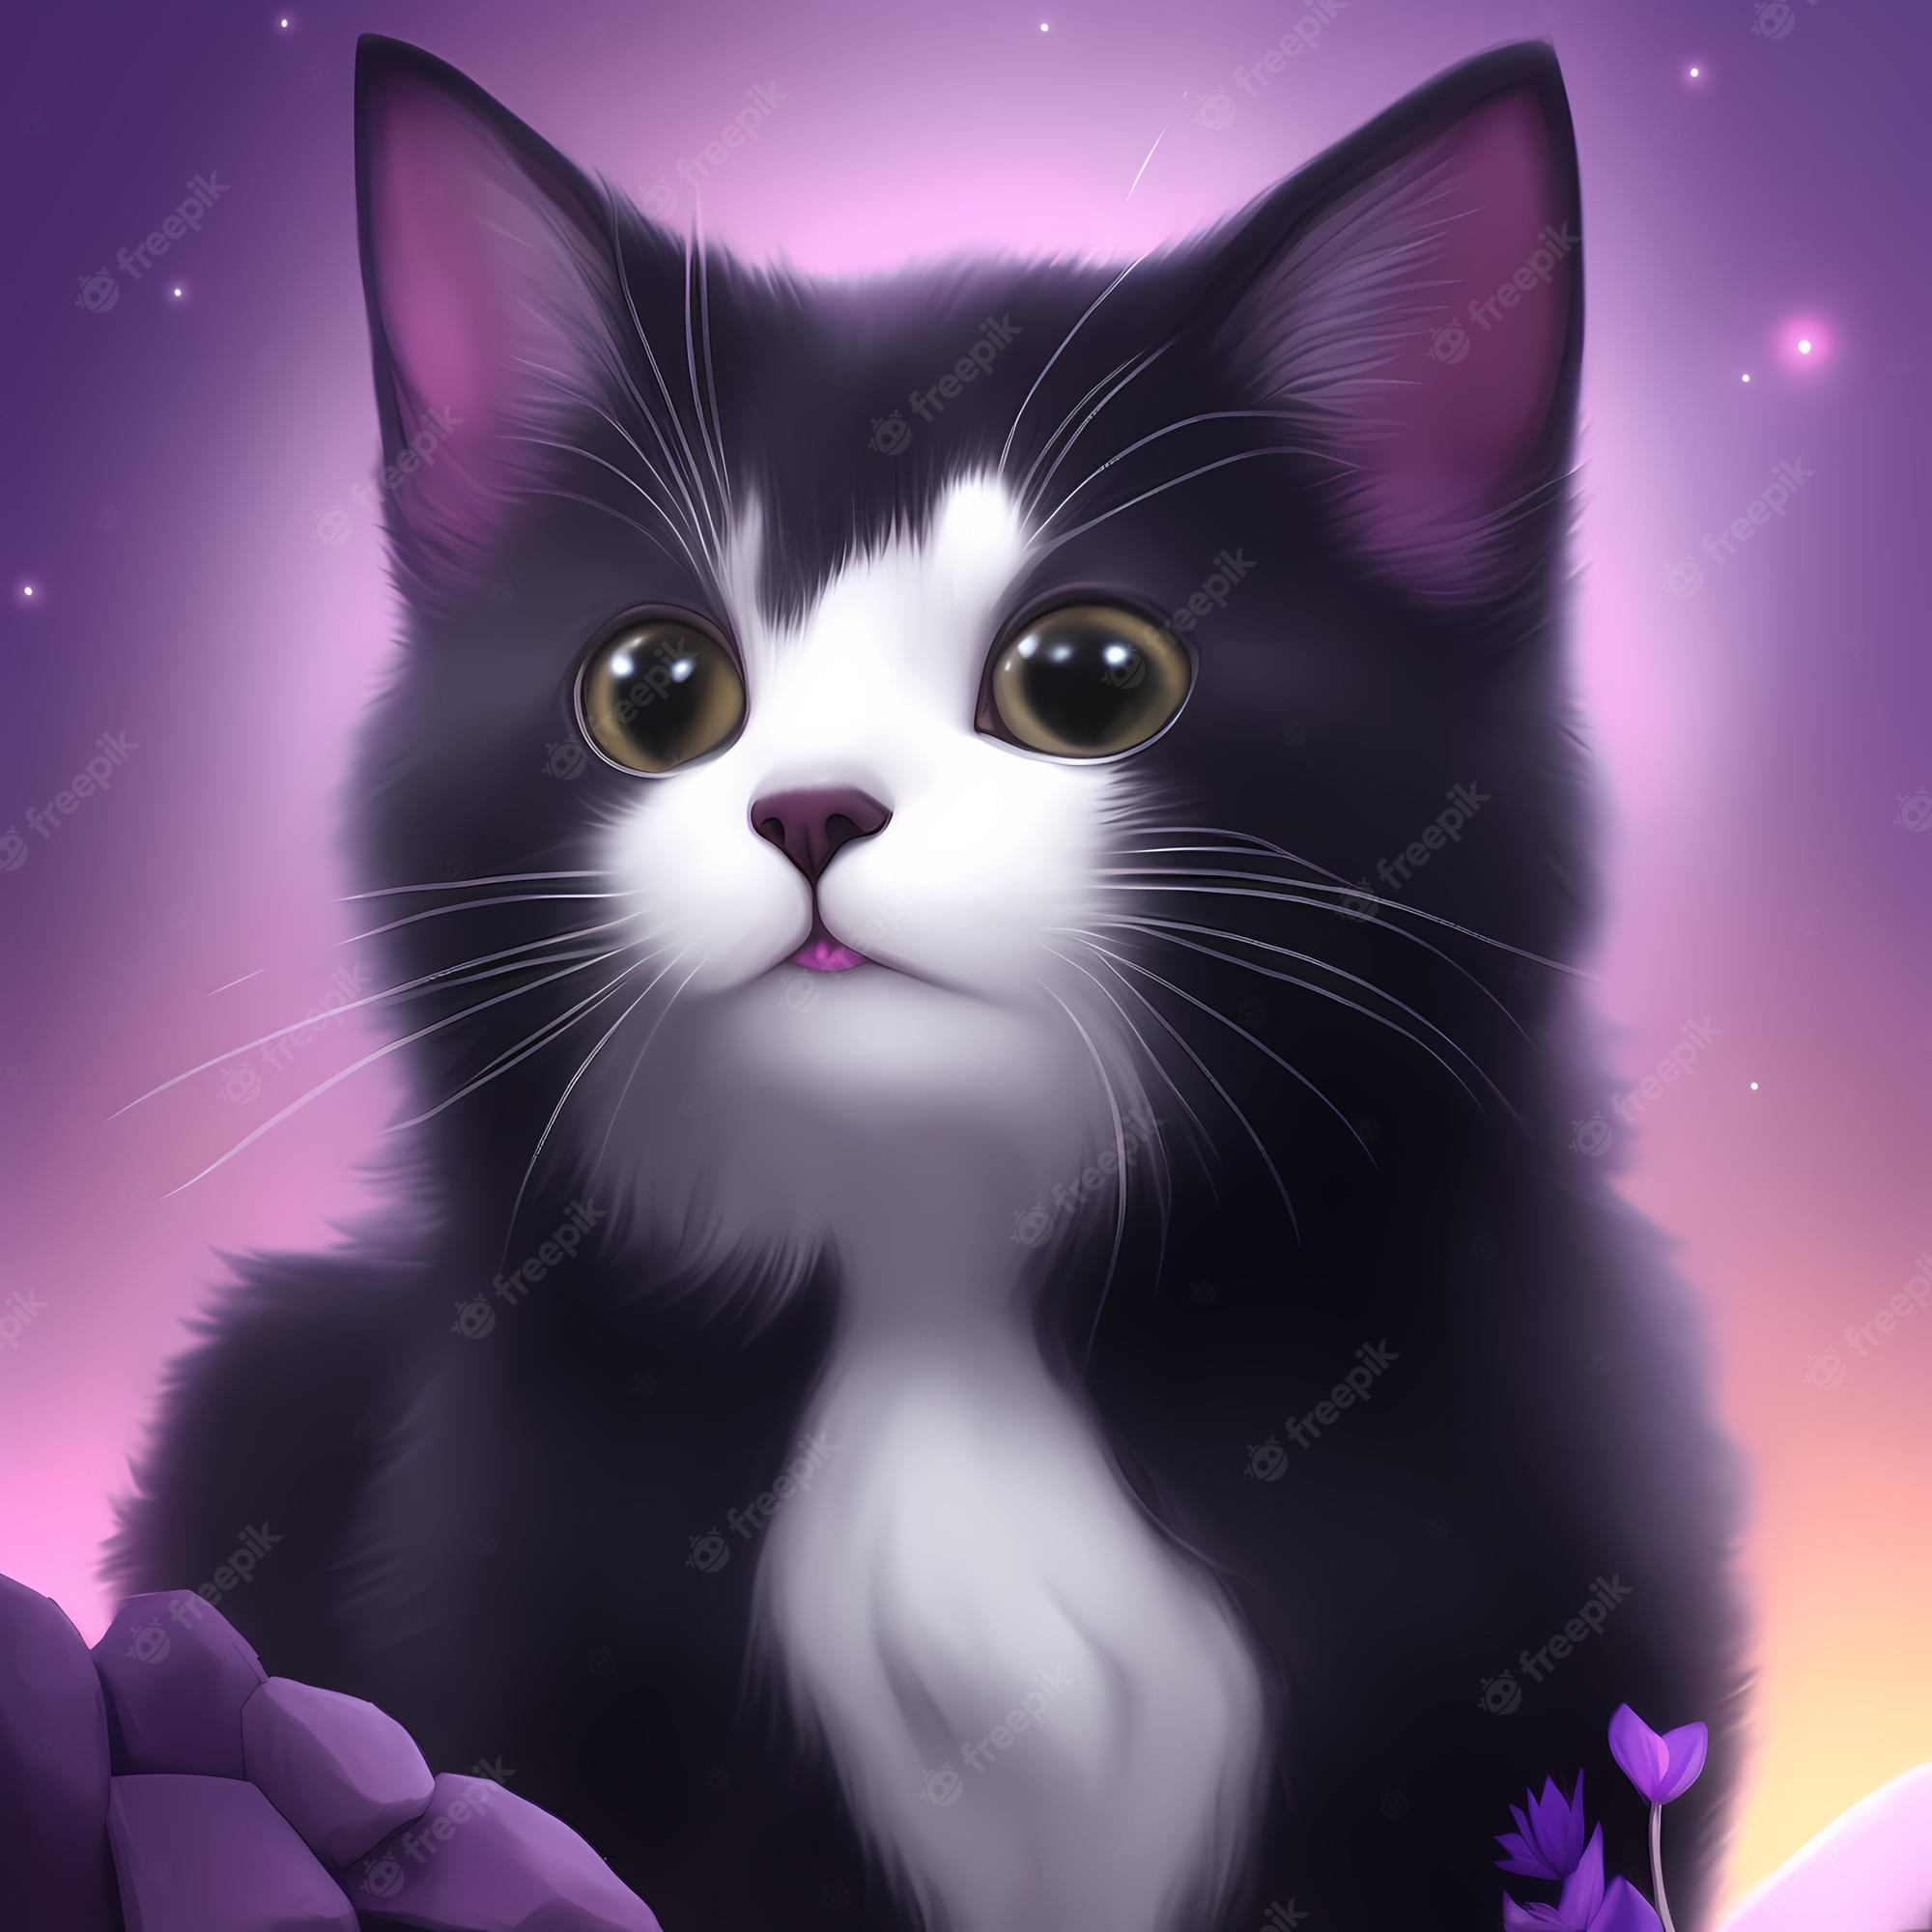 Purple Cat Wallpaper Image